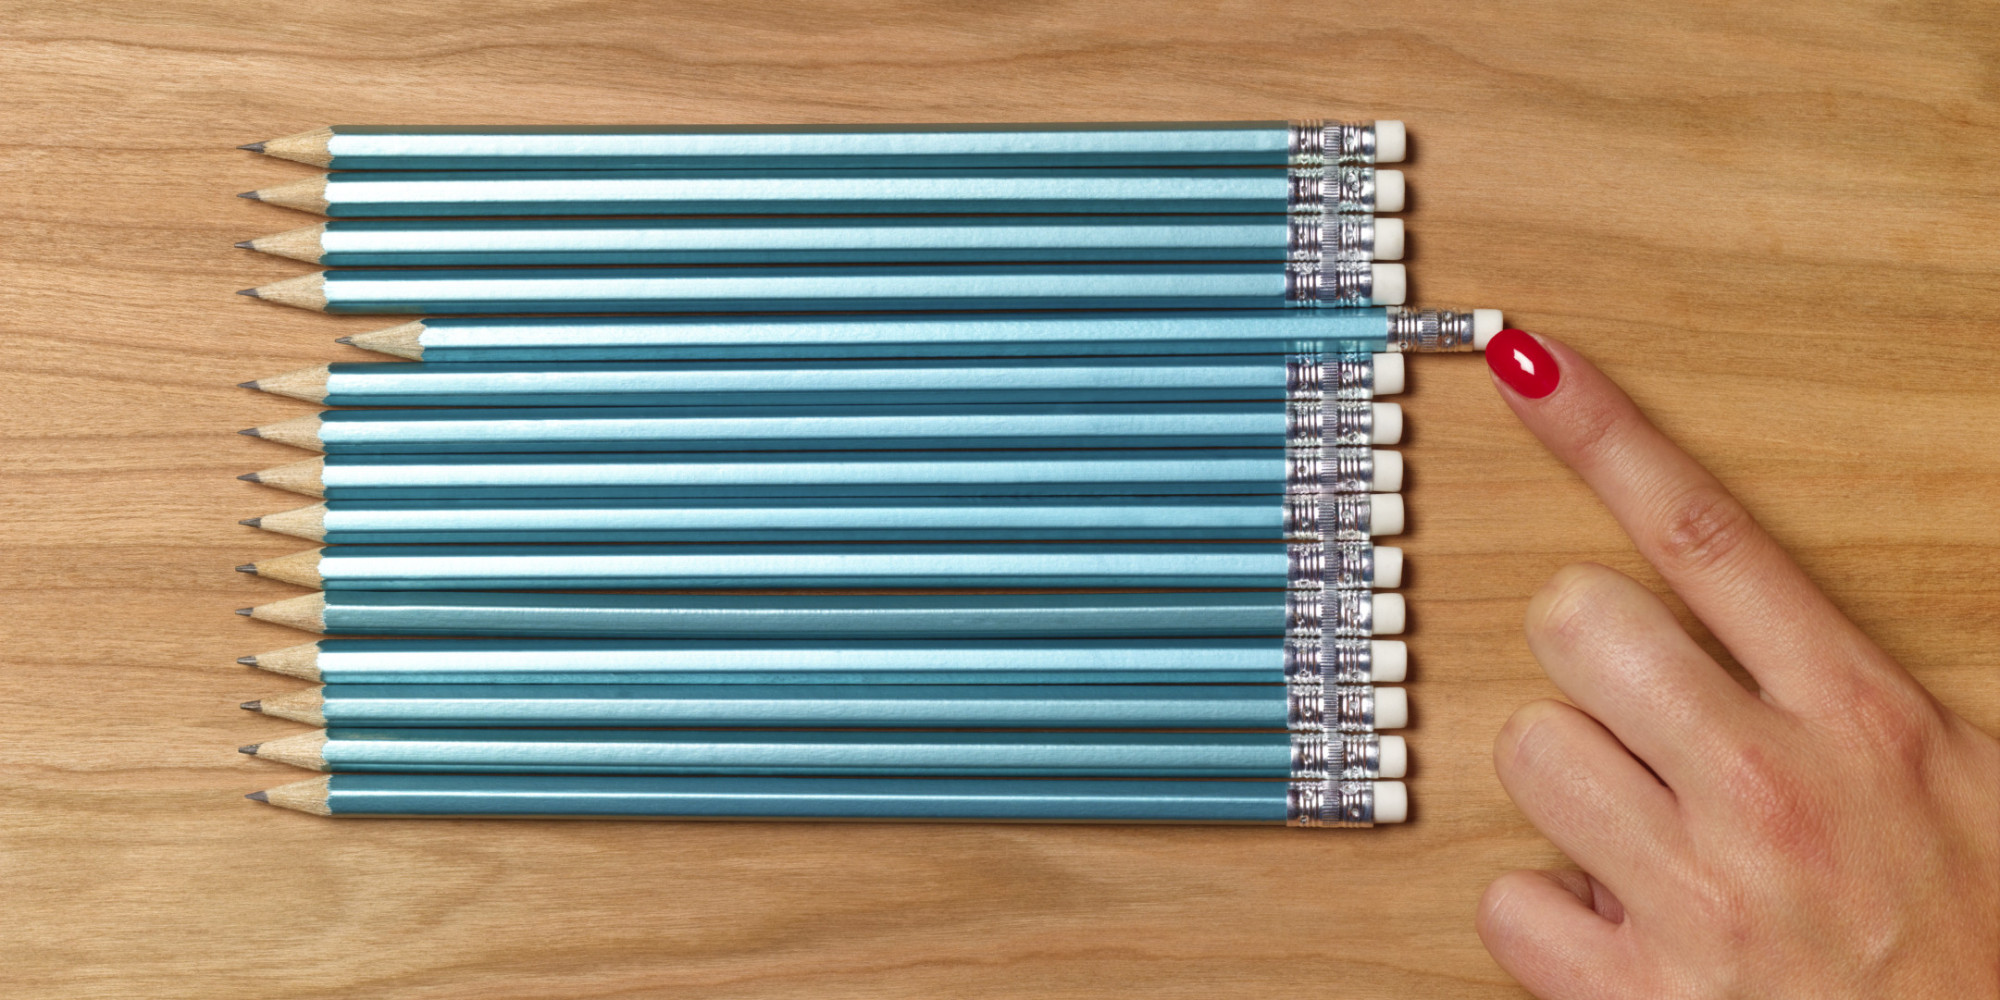 Teacher preparing pencils for school day